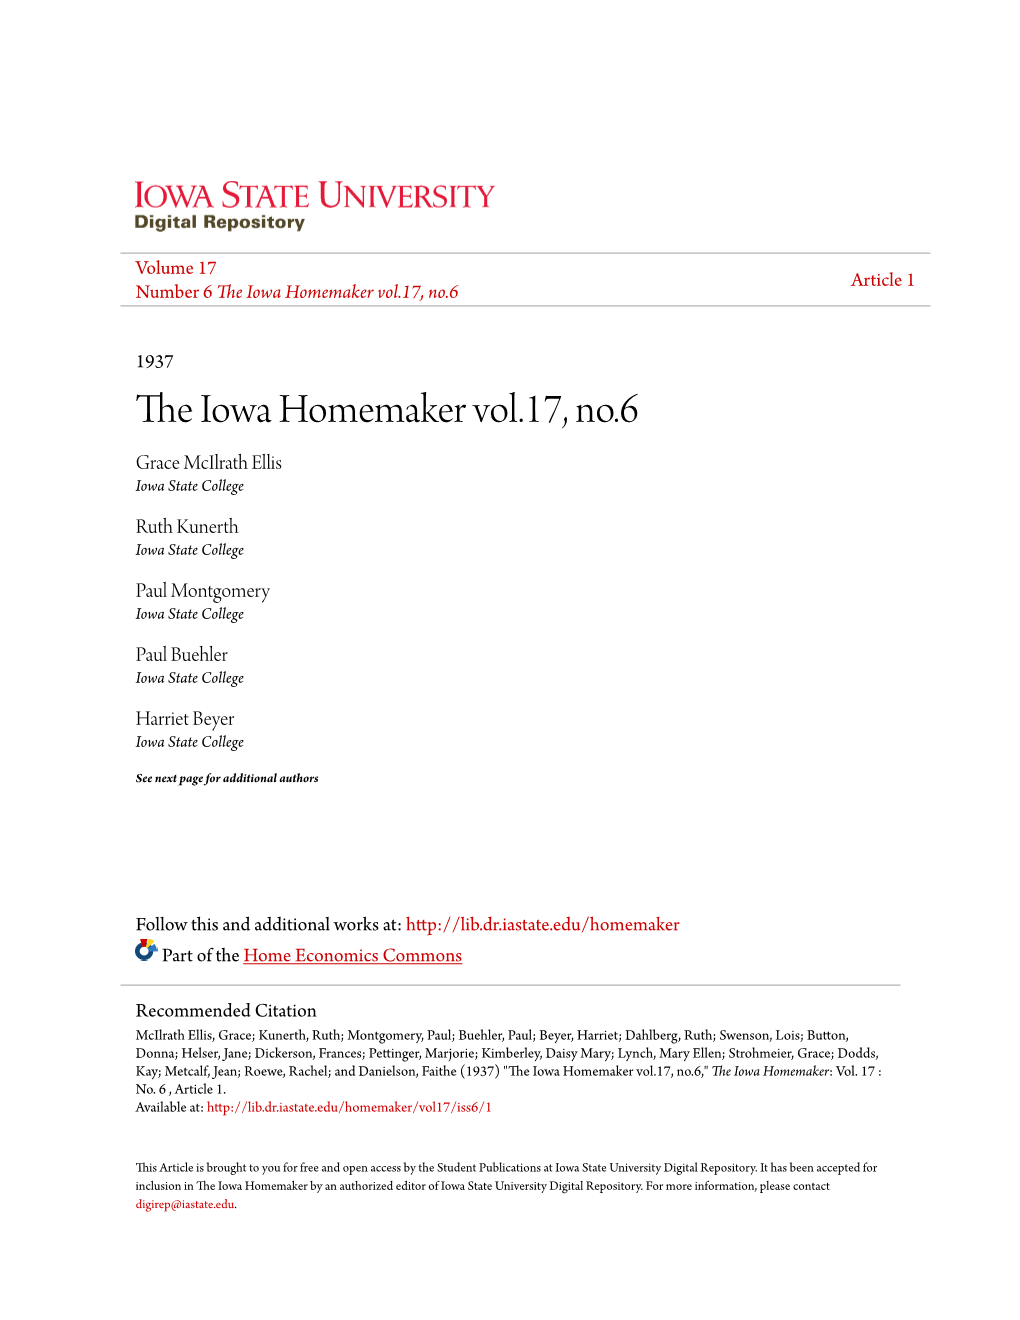 The Iowa Homemaker Vol.17, No.6